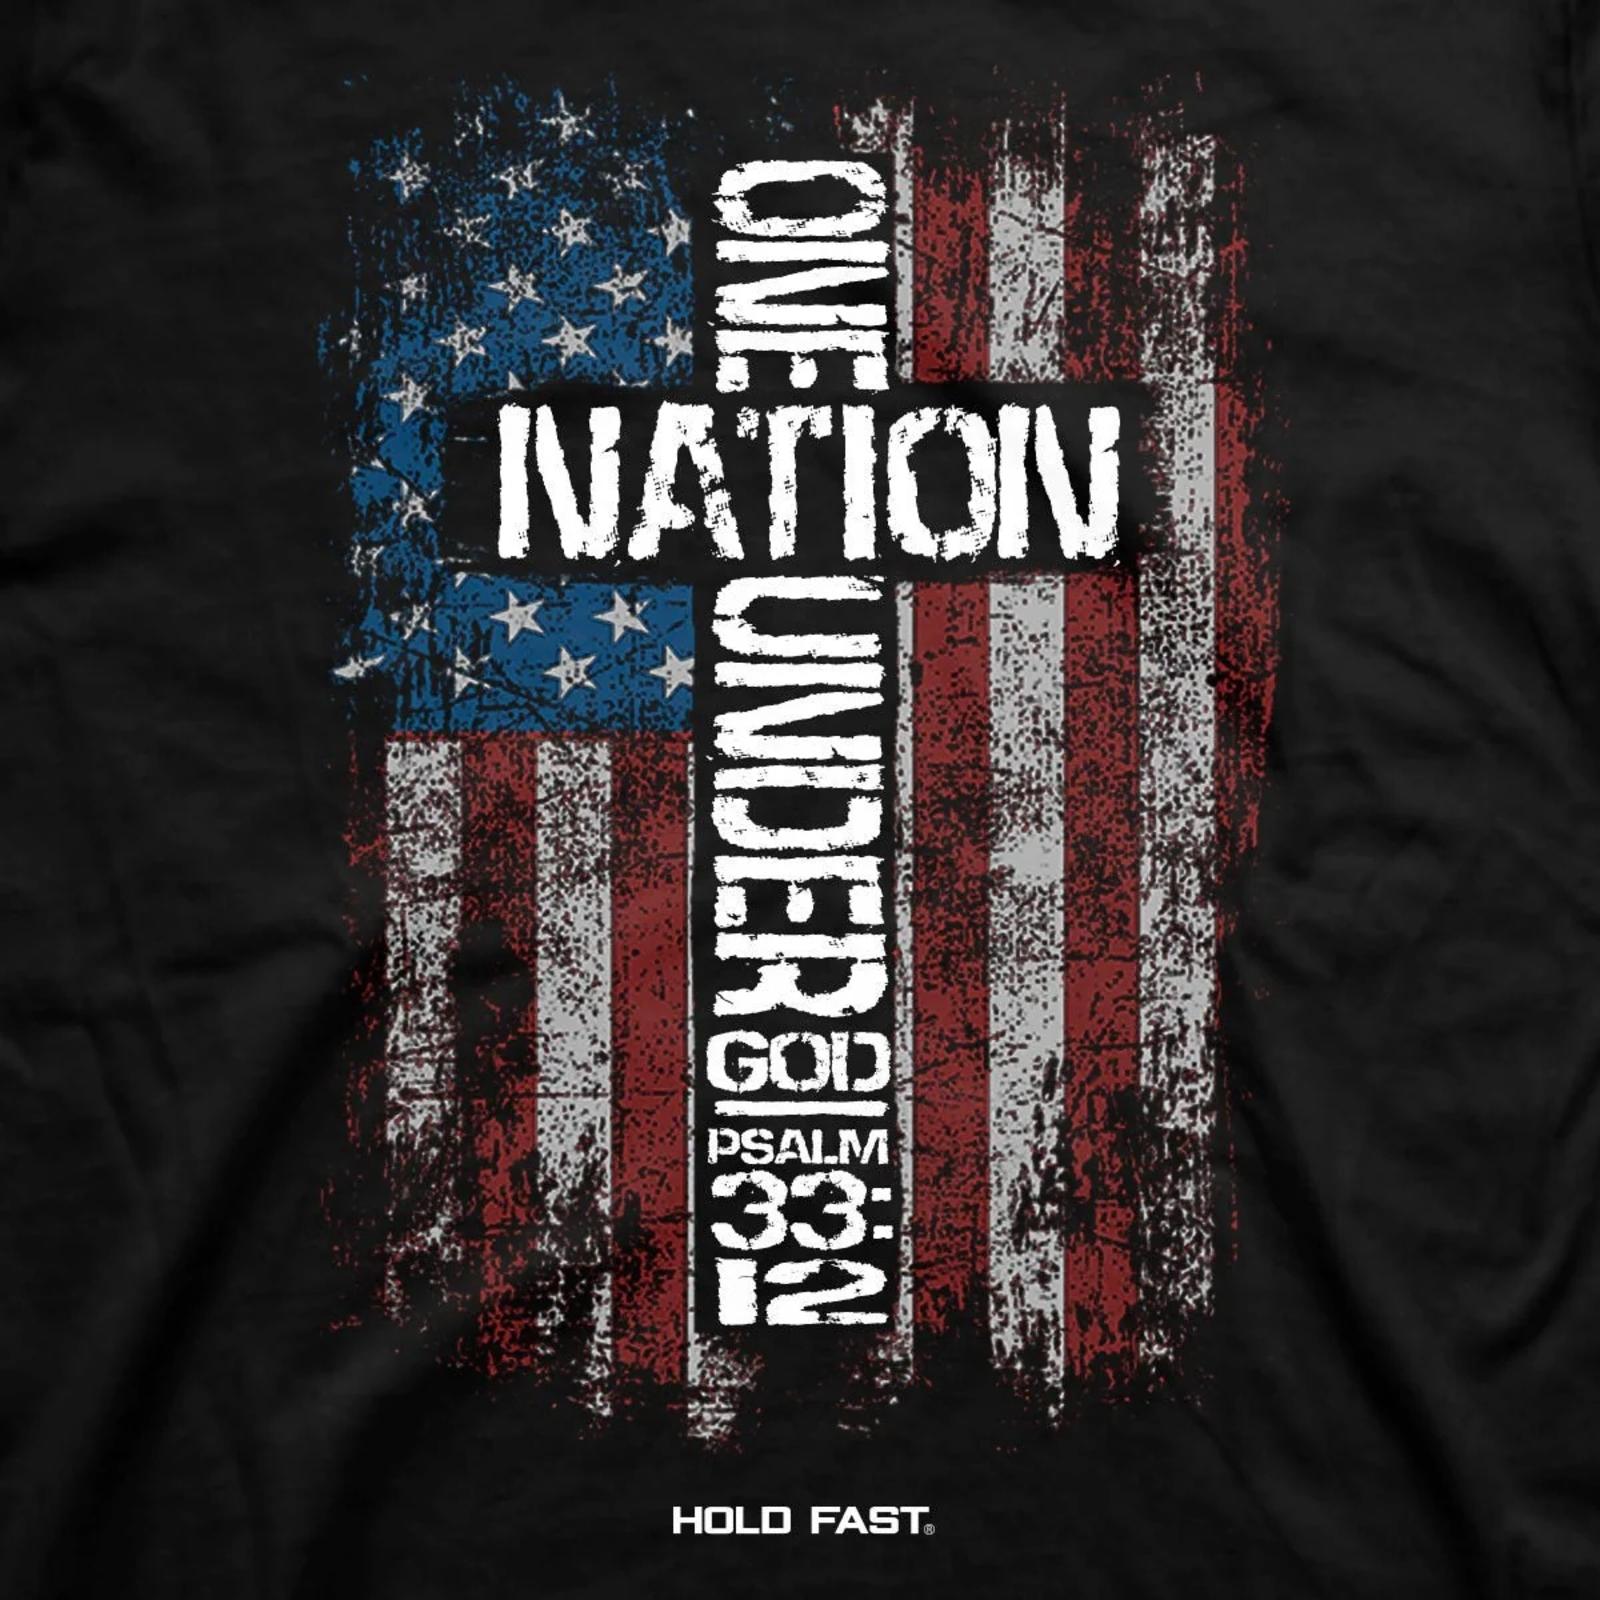 Kerusso HOLD FAST Men's T-Shirt One Nation Under God